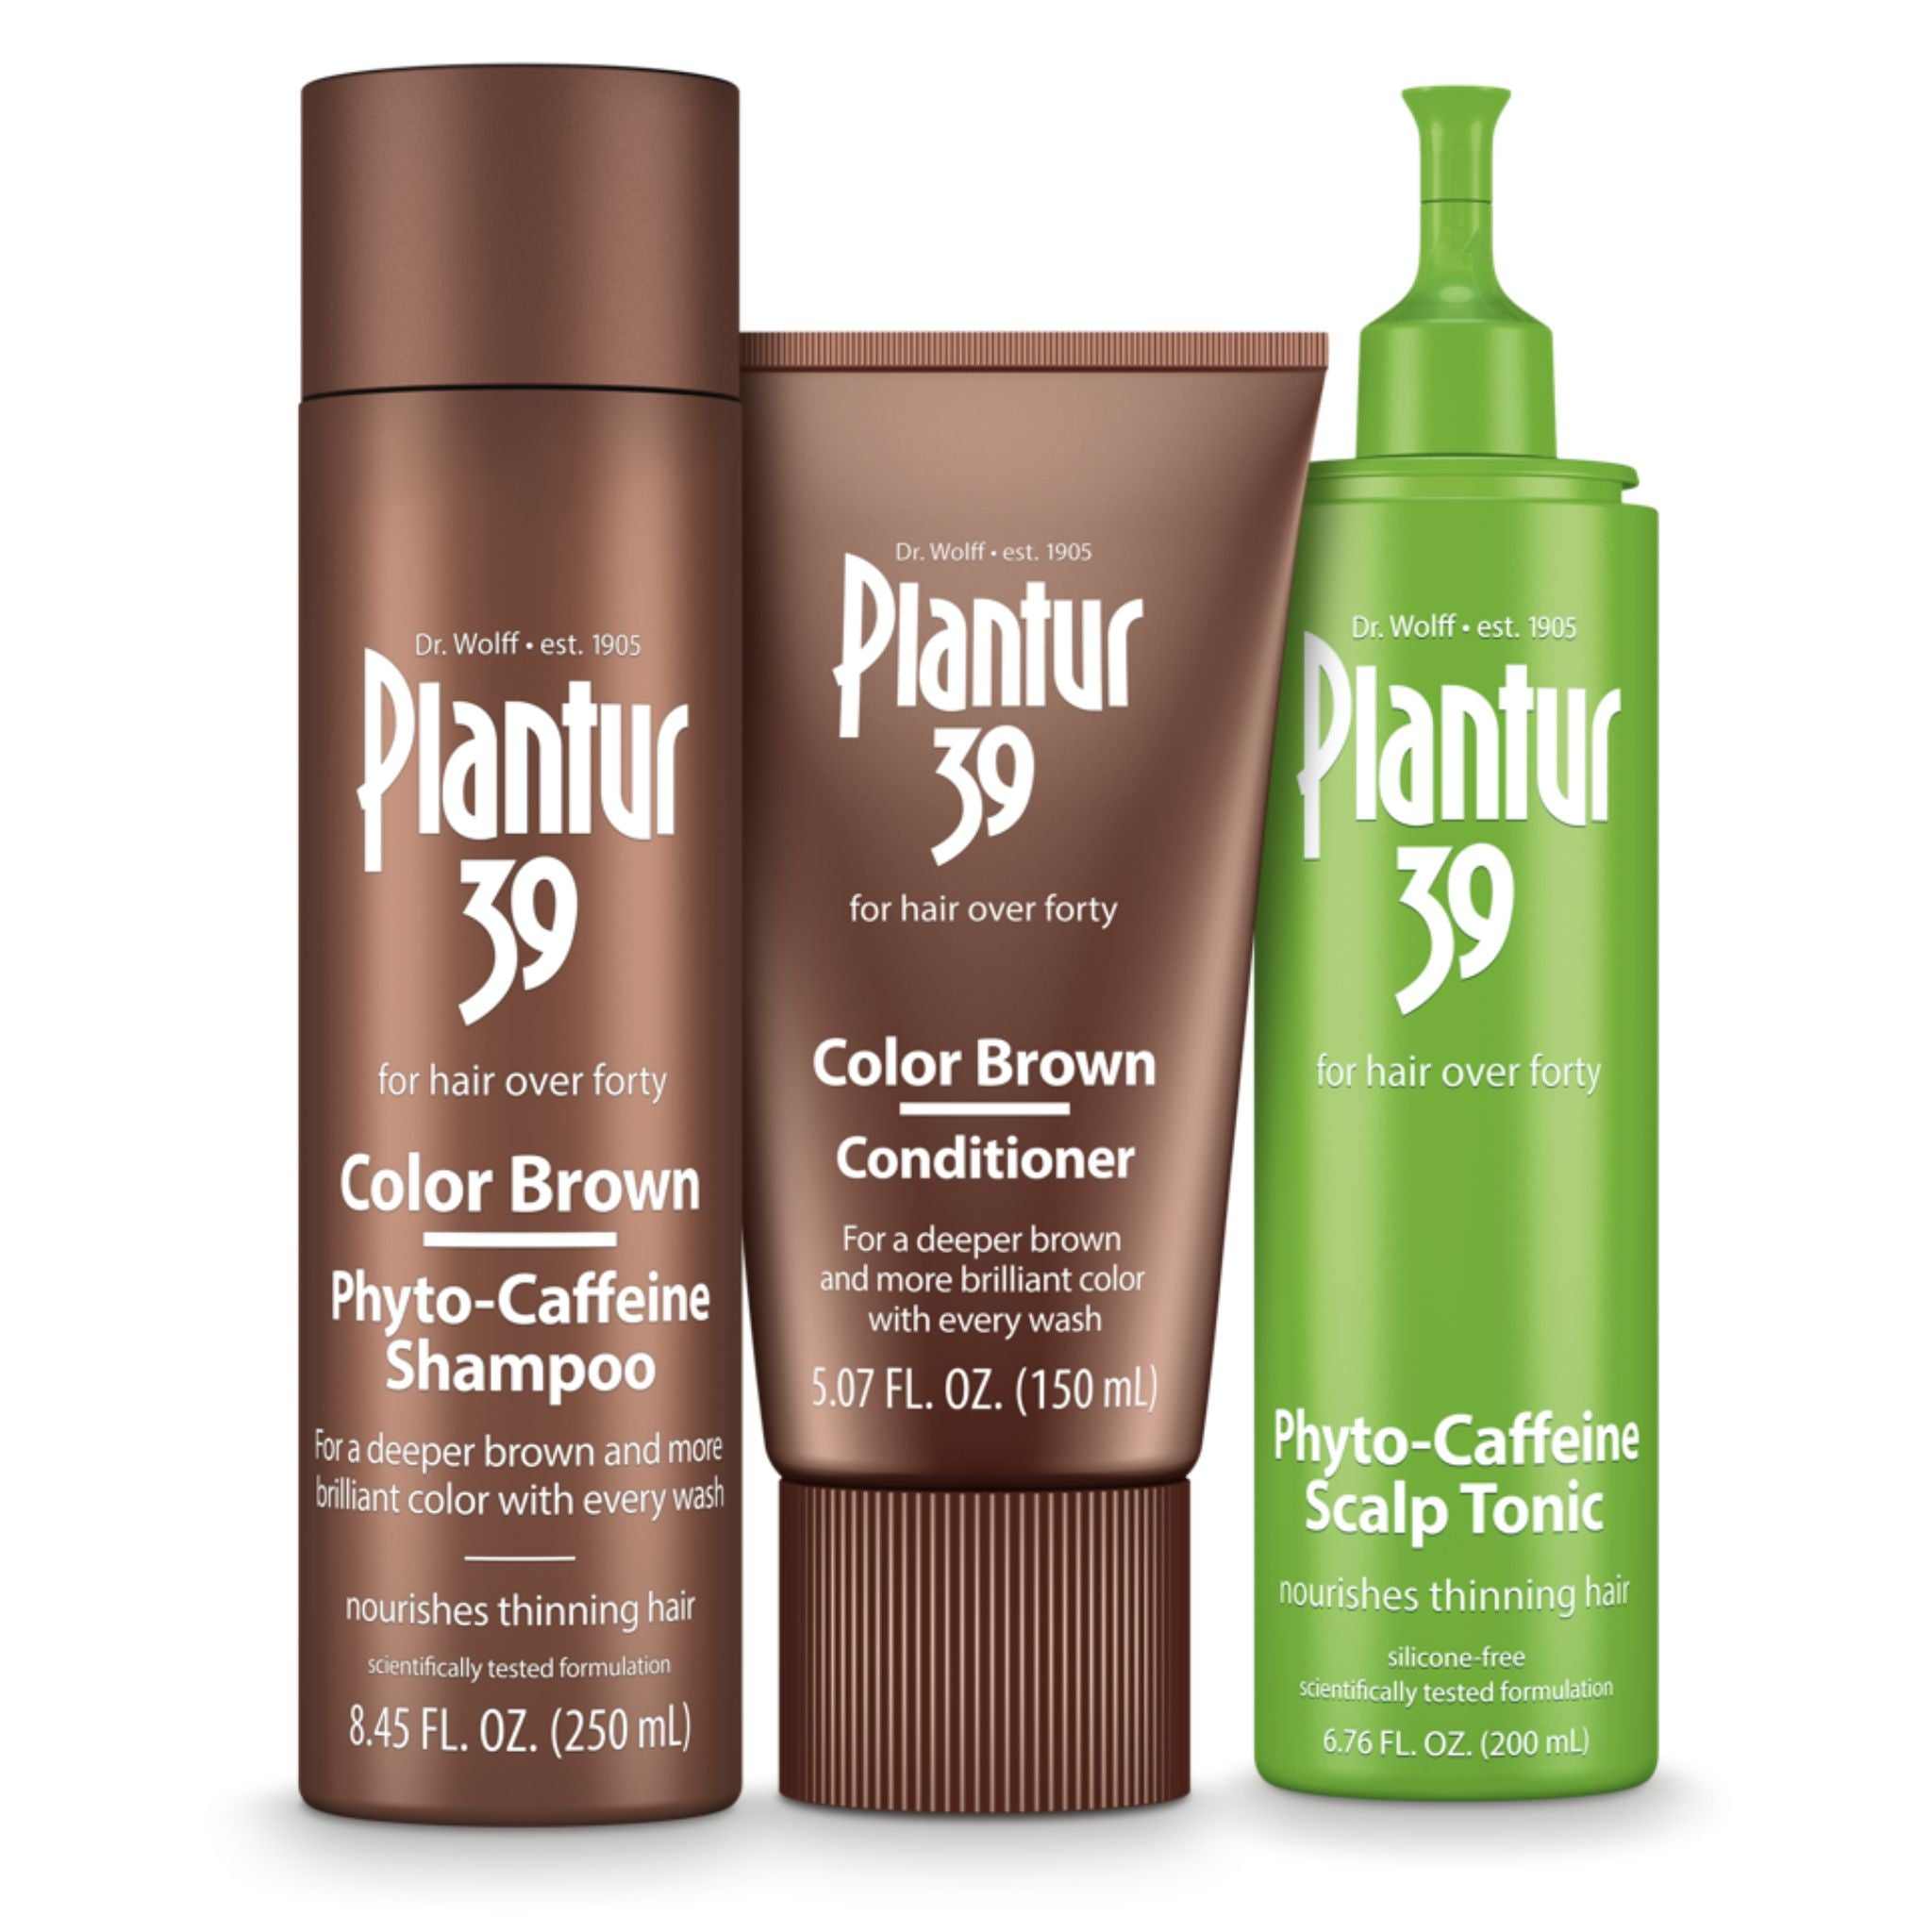 Plantur 39 Color Brown Shampoo, Conditioner, and Tonic Set